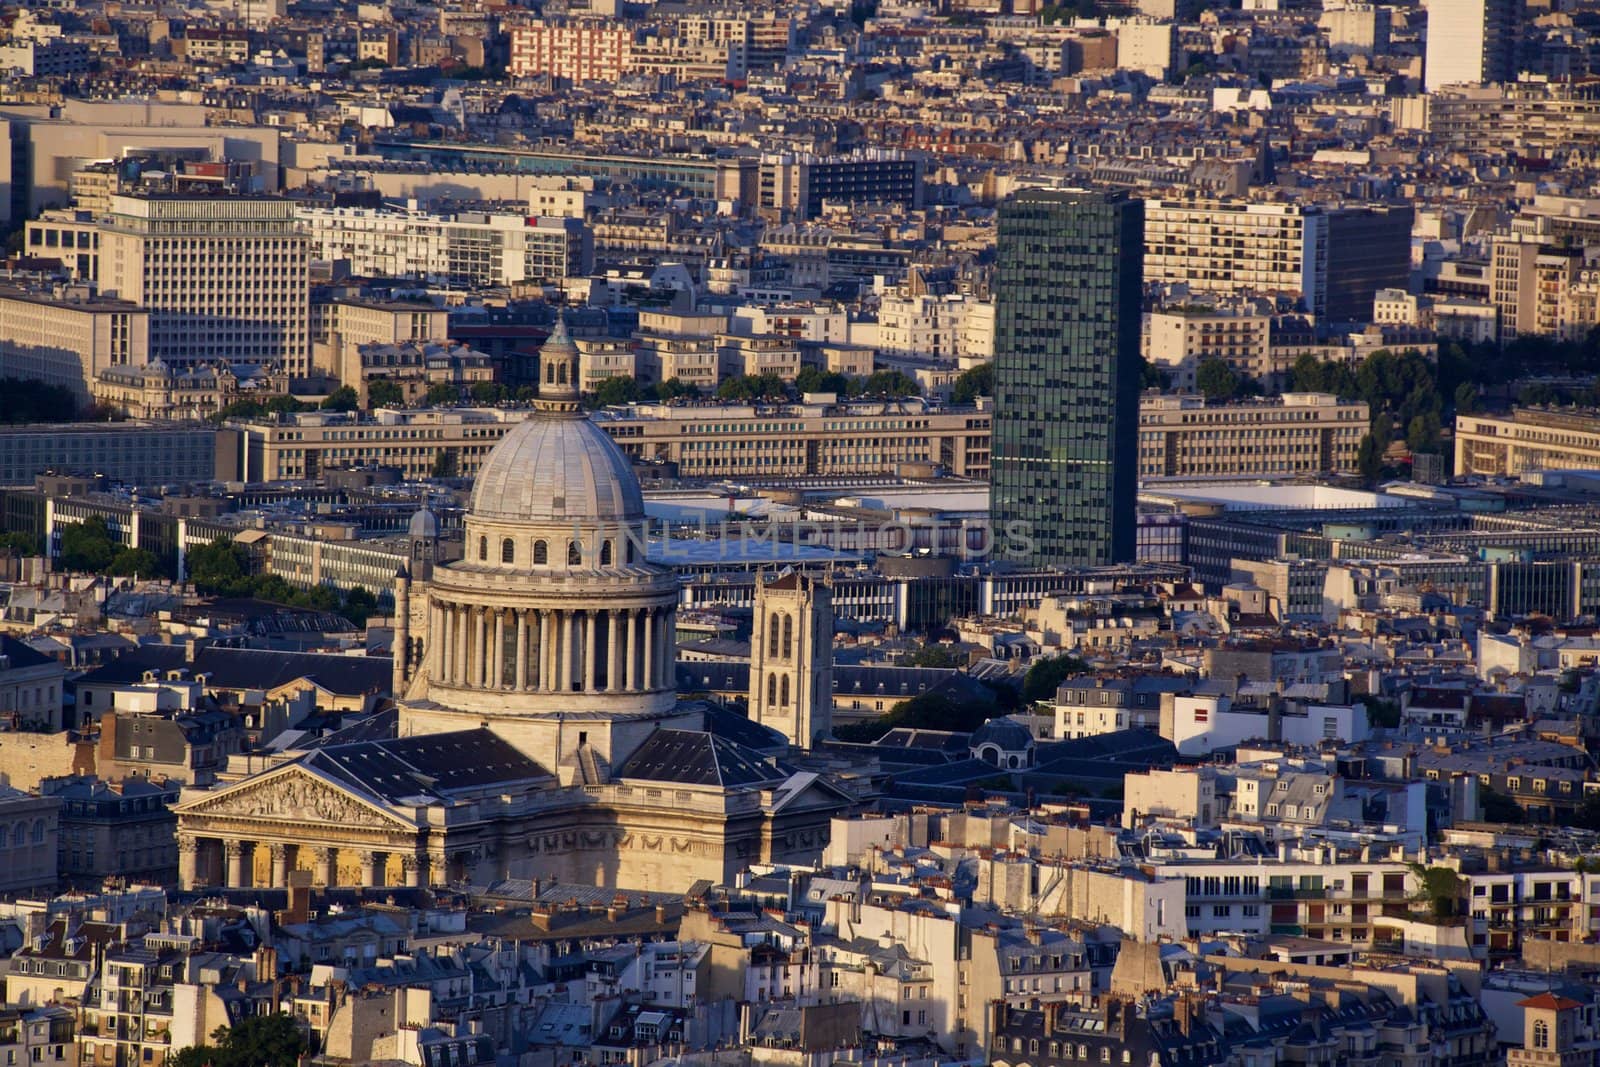 Paris Latin quarter by Harvepino